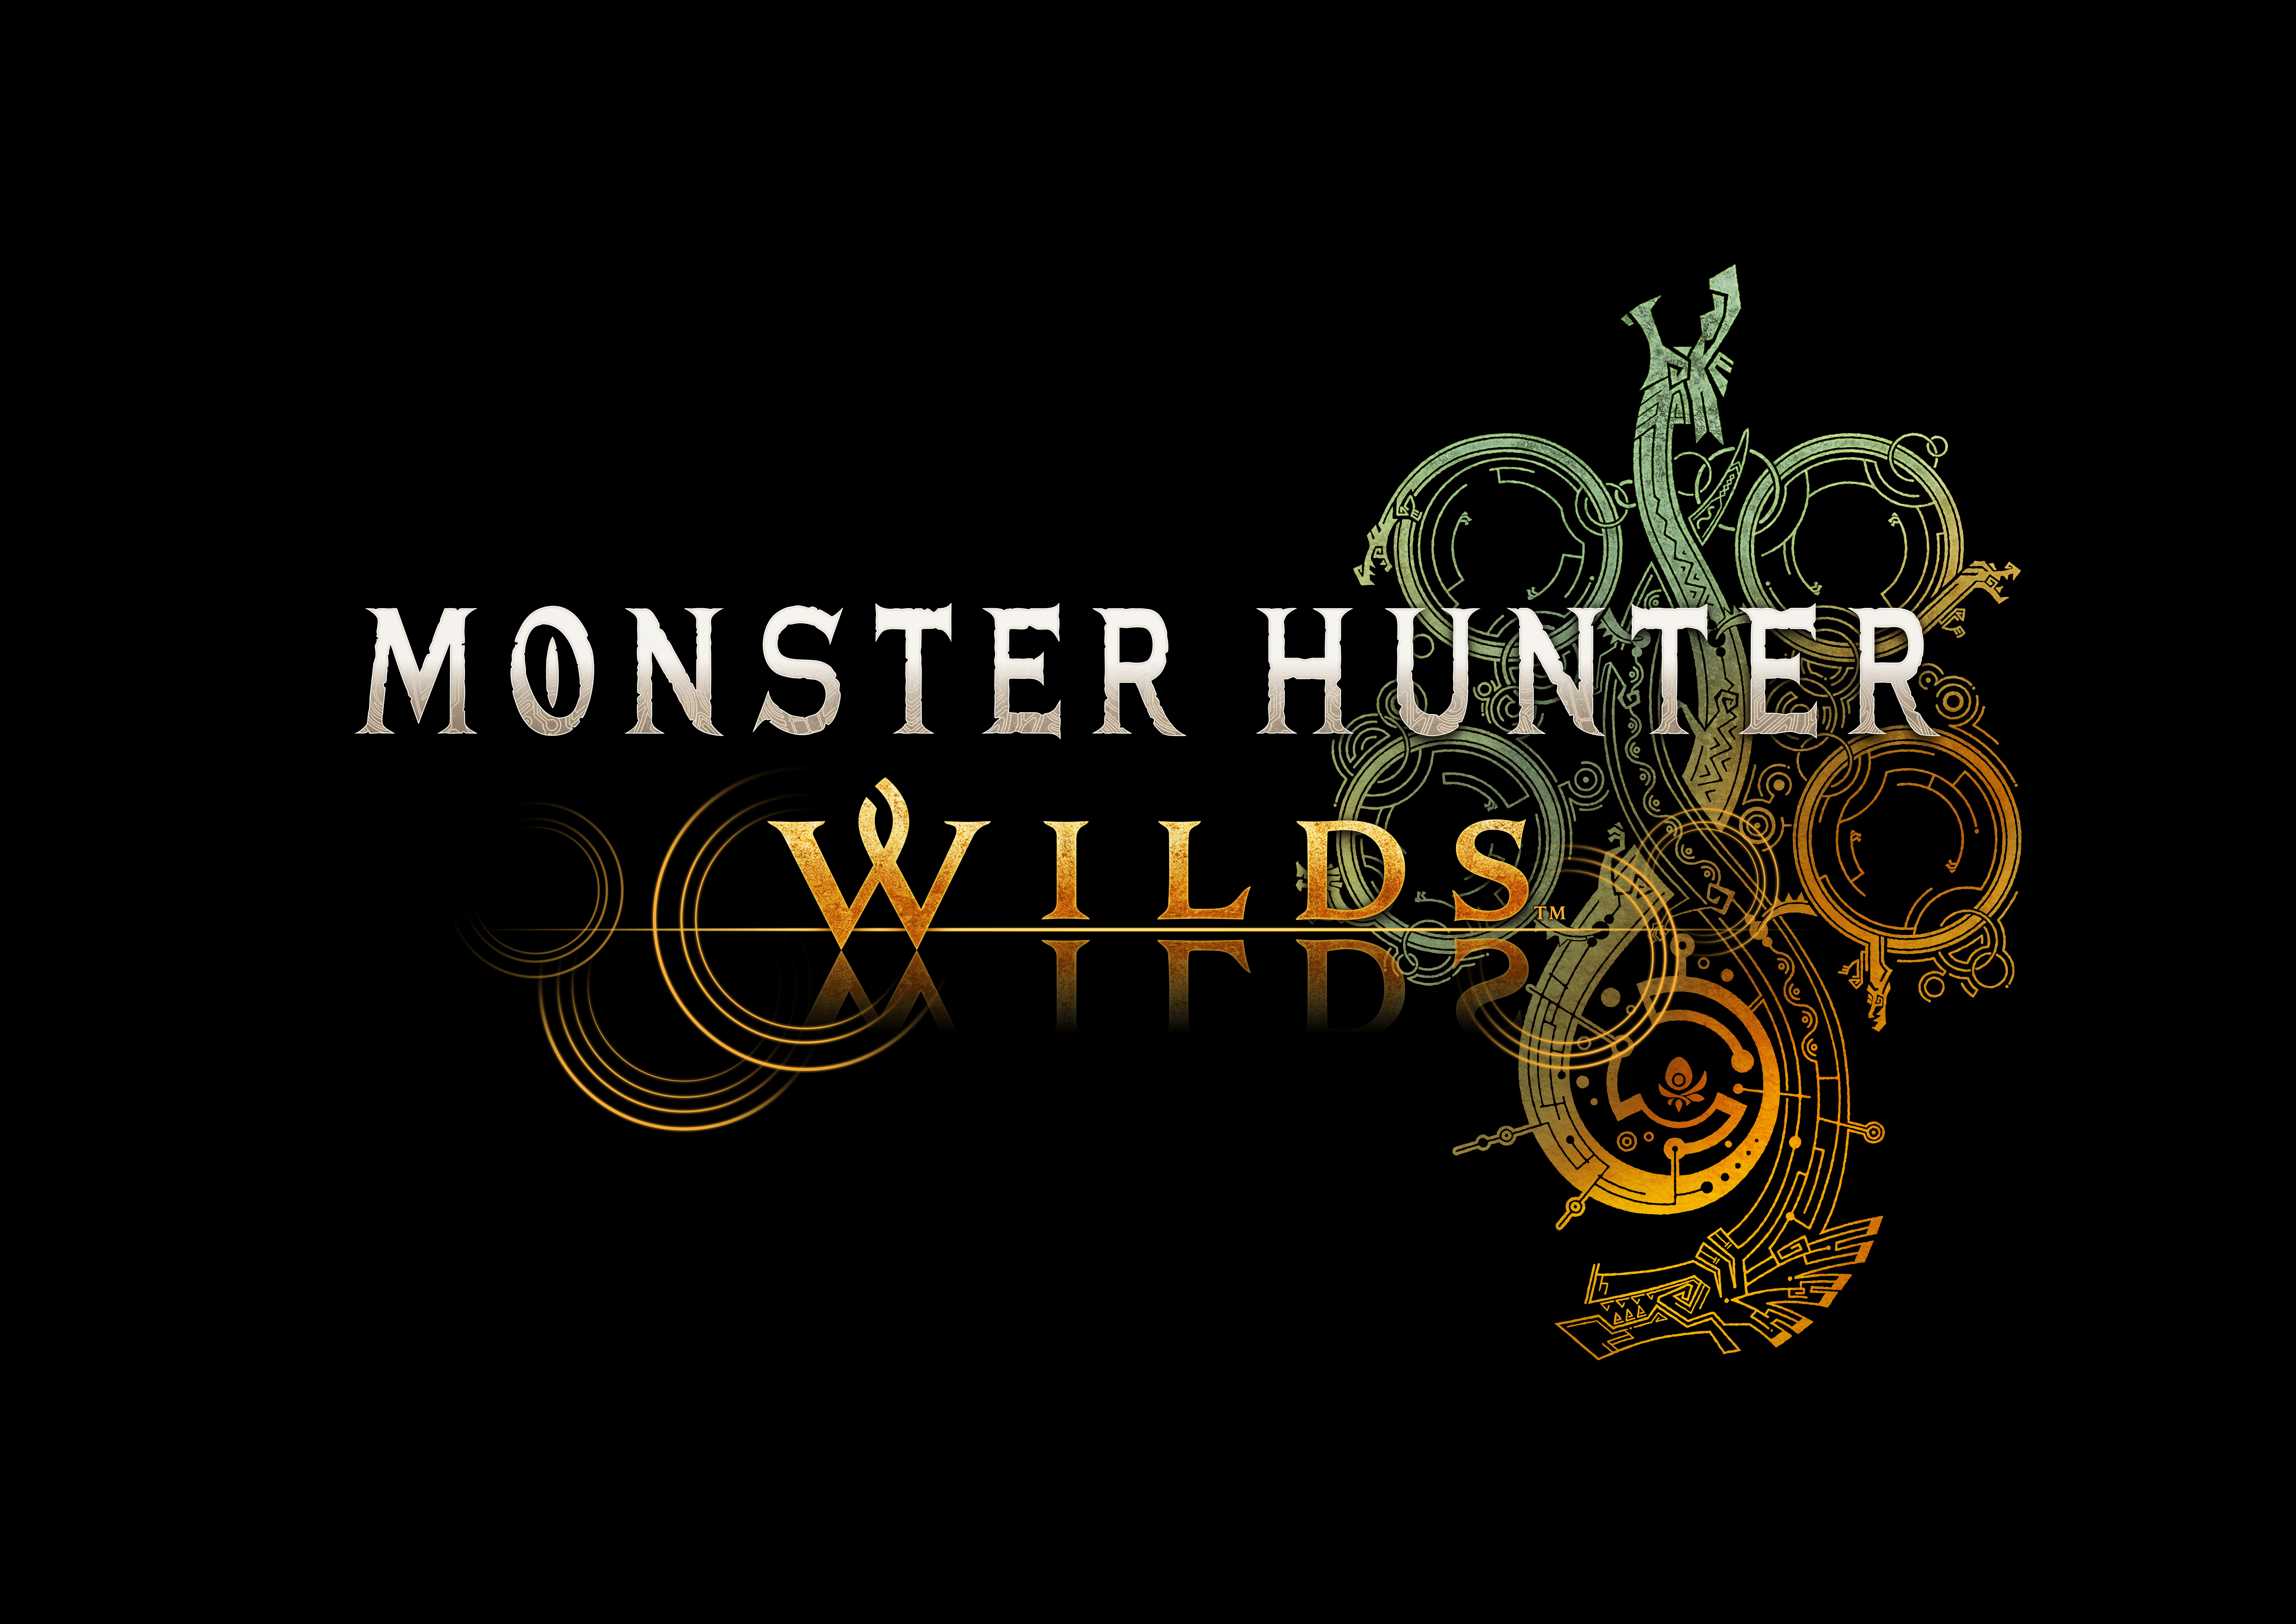 arriva-il-nuovo-monster-hunter-wilds-main